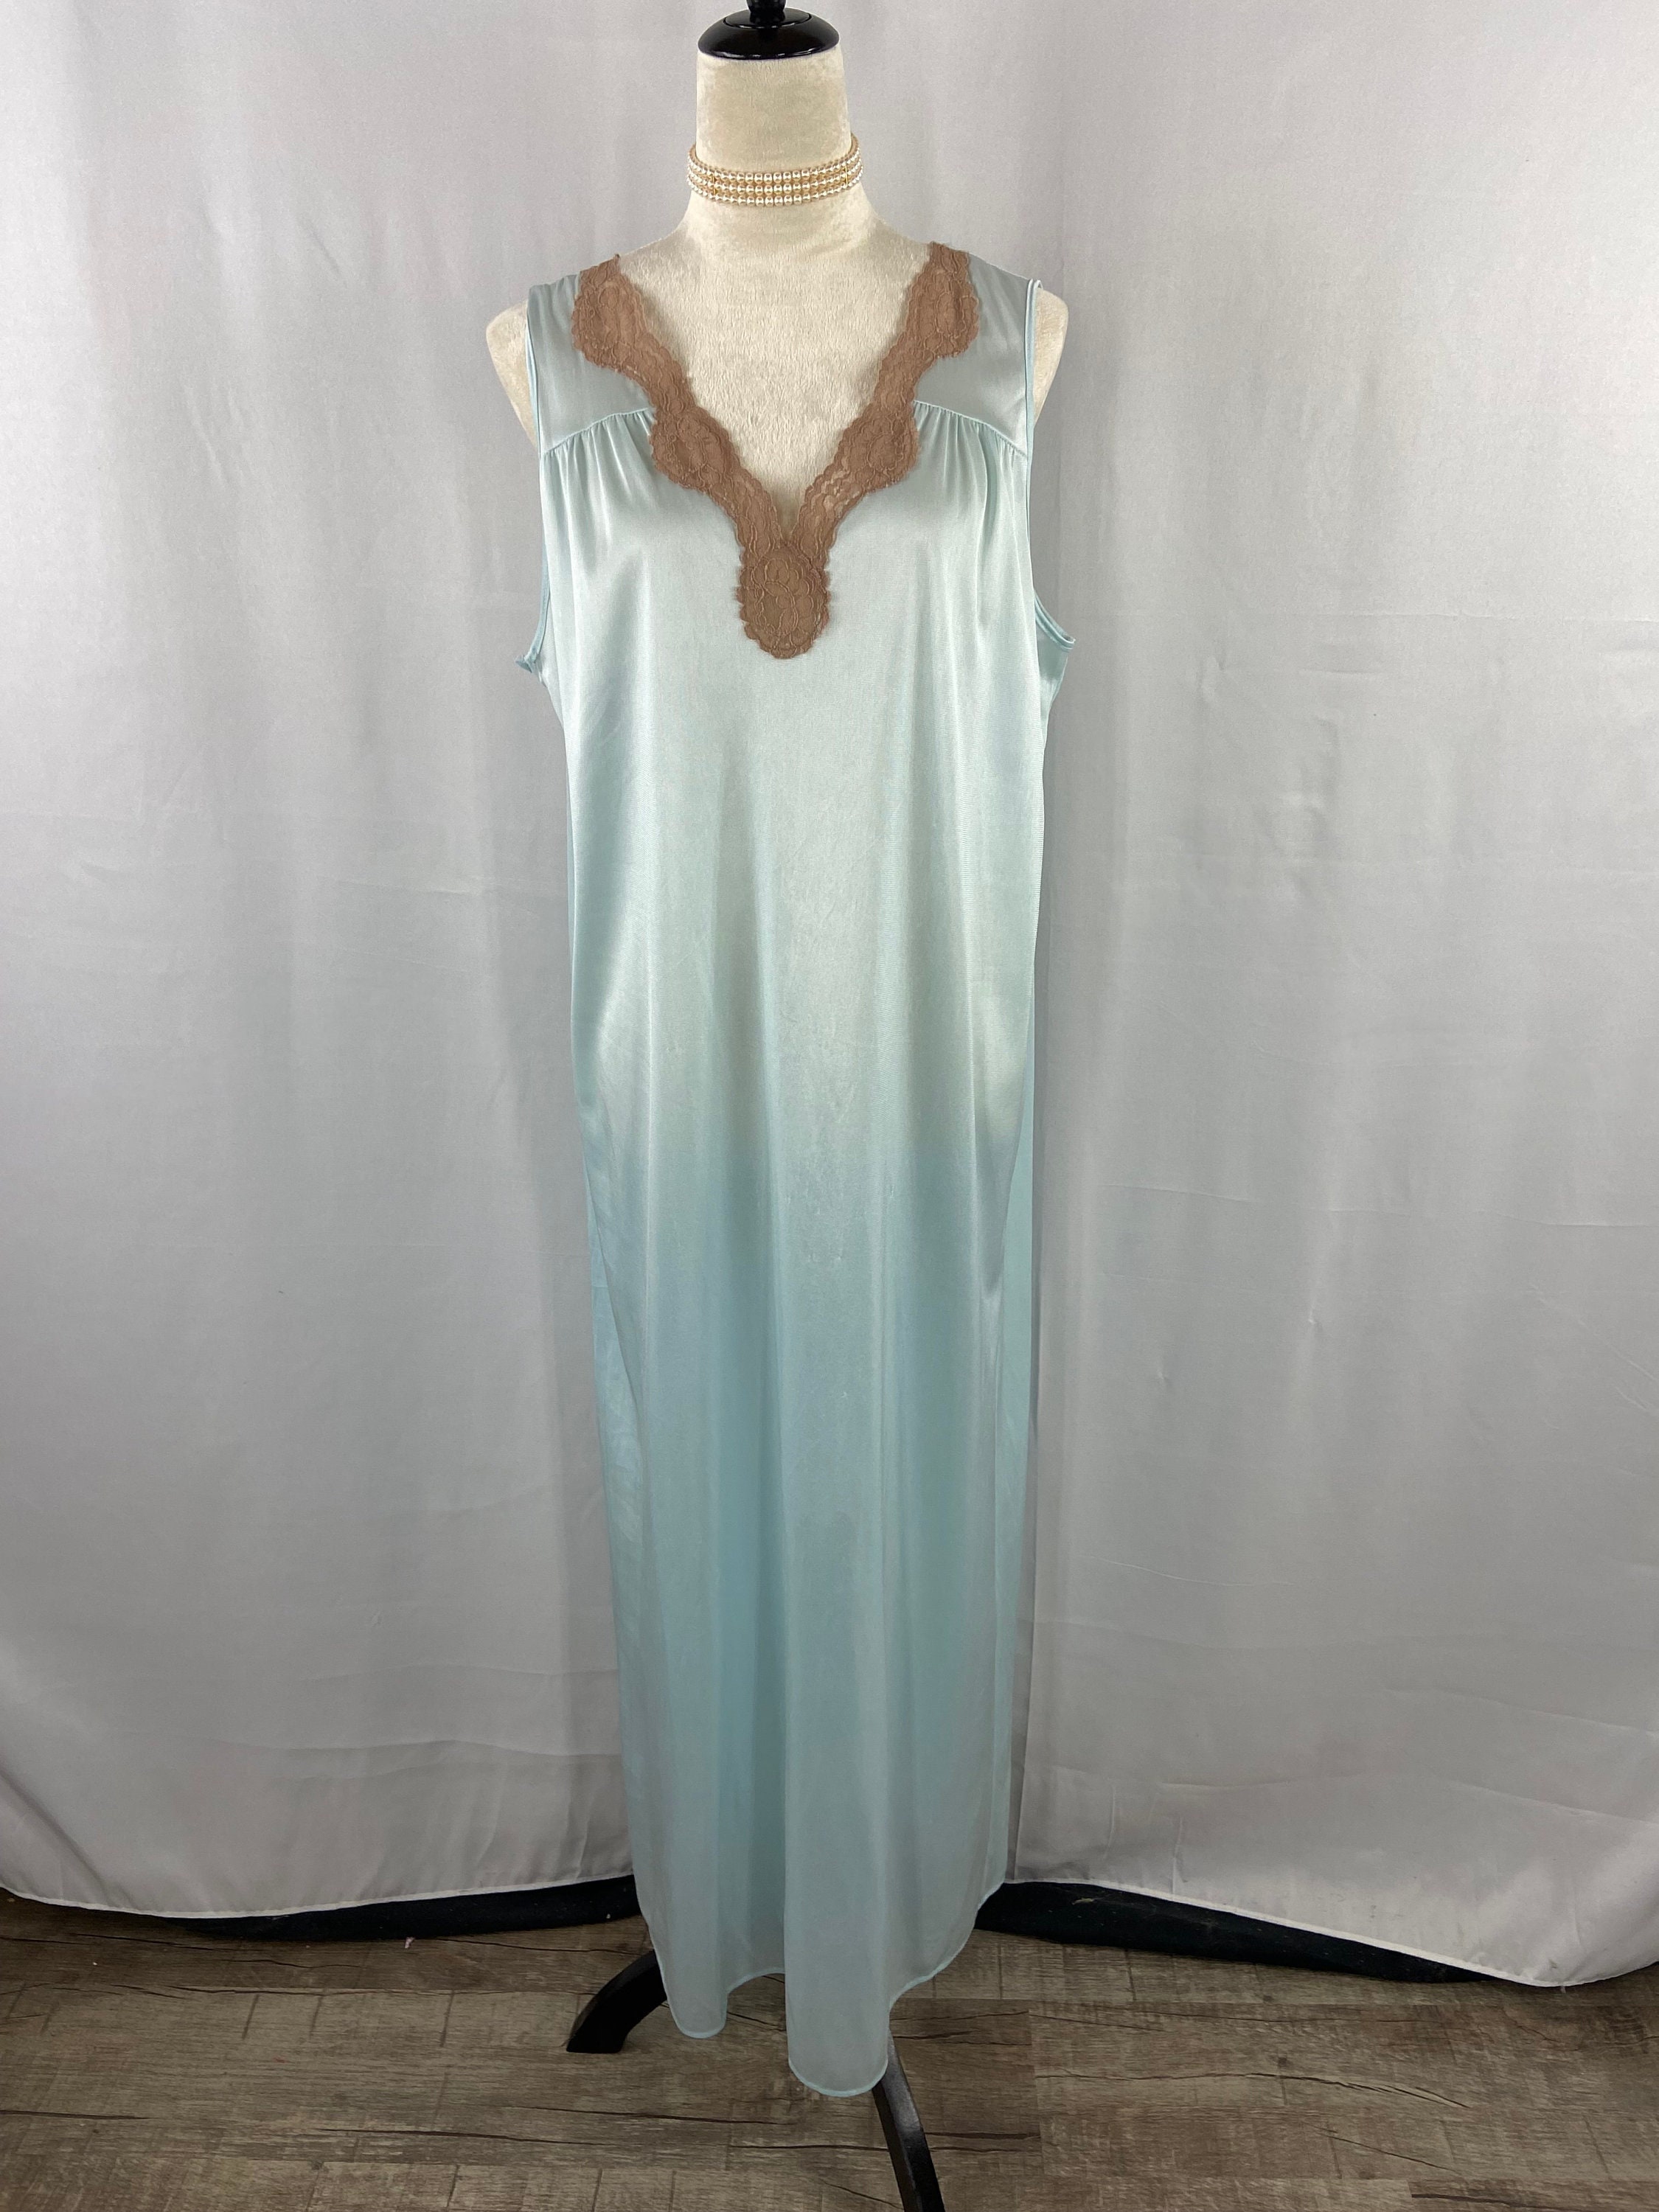 Vintage HANRO beautiful long Lace Cotton white gown, slip size 38